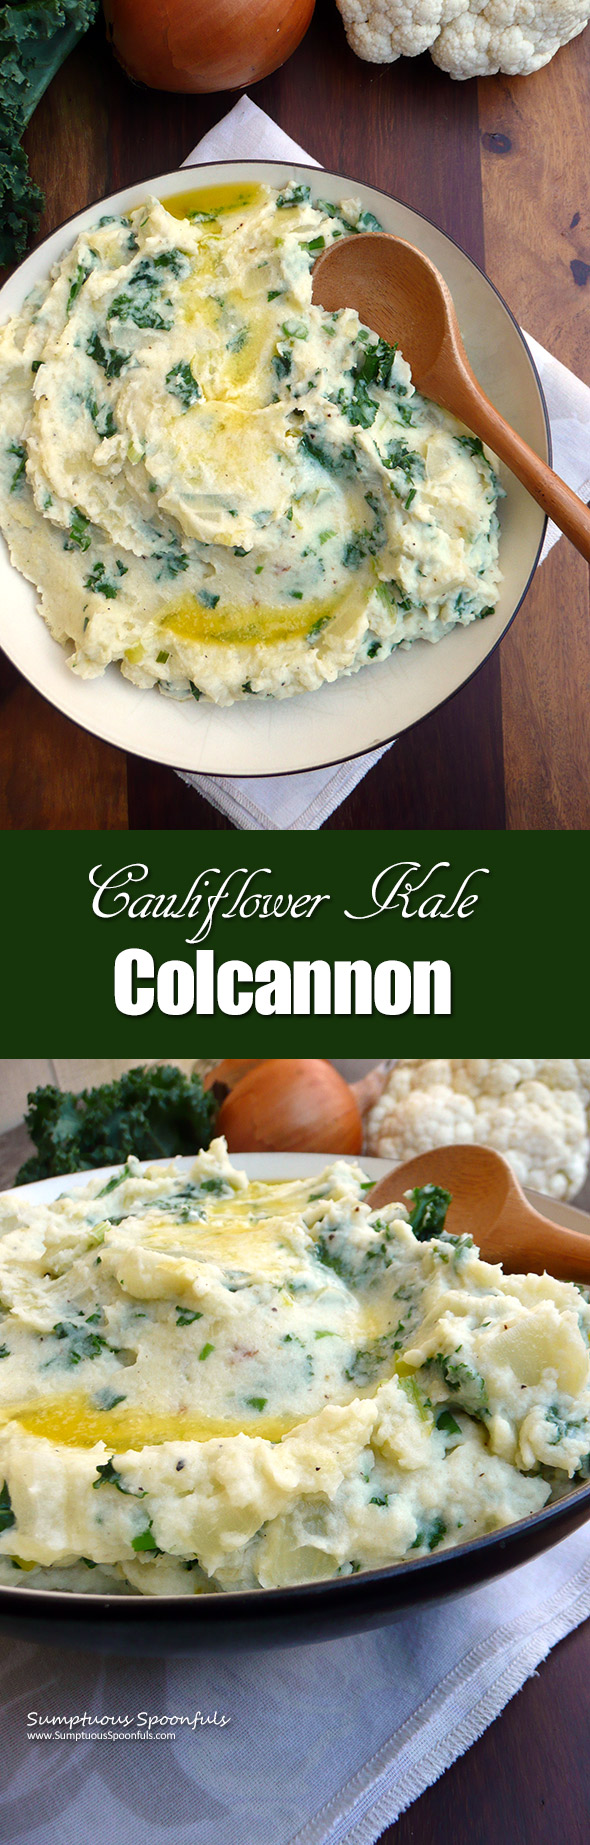 Cauliflower "Kale"-cannon ~ the popular Irish comfort dish Colcannon, lightened up with cauliflower and kale!